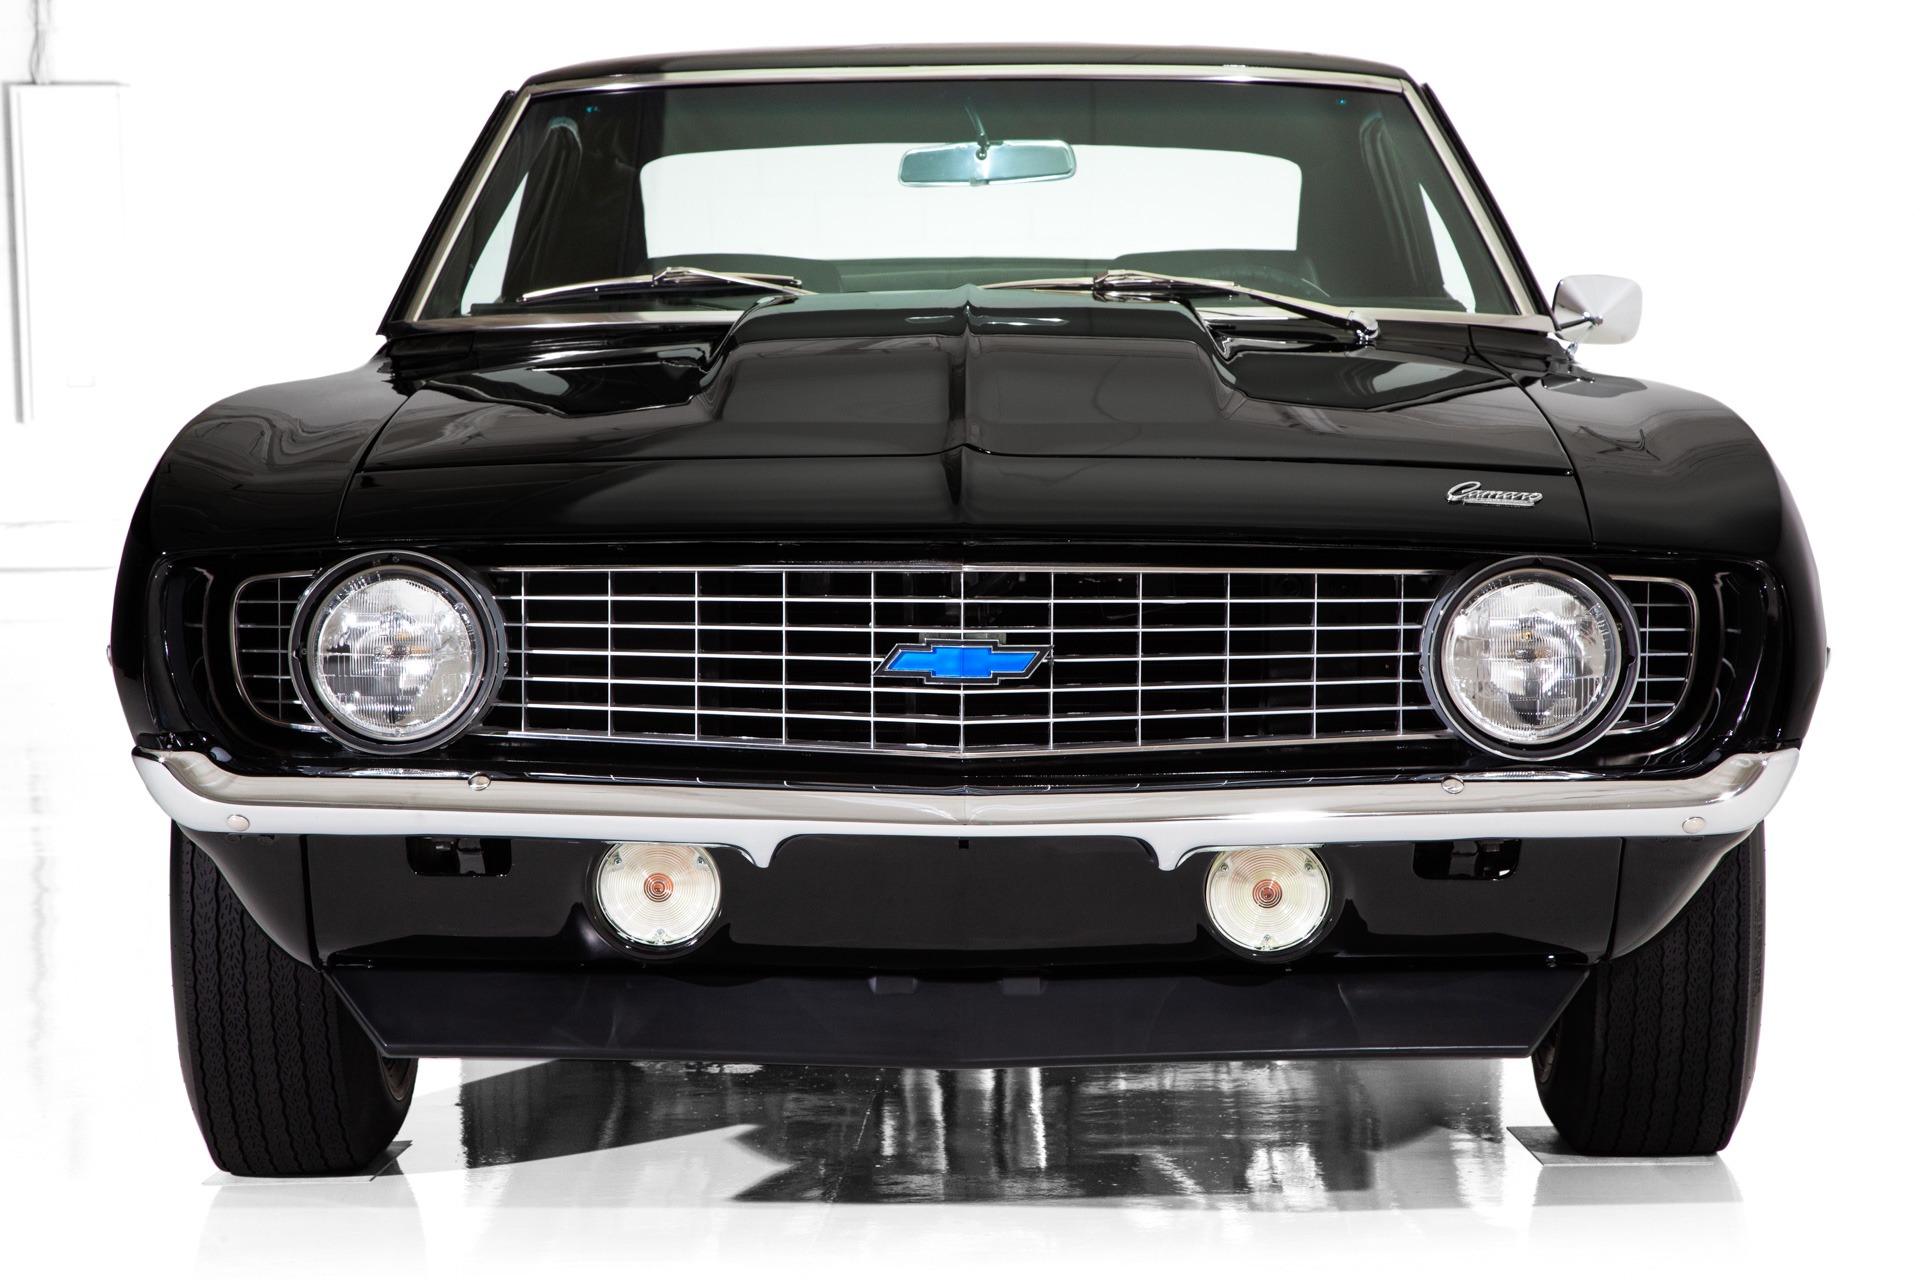 For Sale Used 1969 Chevrolet Camaro Copo 427/425hp Engine | American Dream Machines Des Moines IA 50309